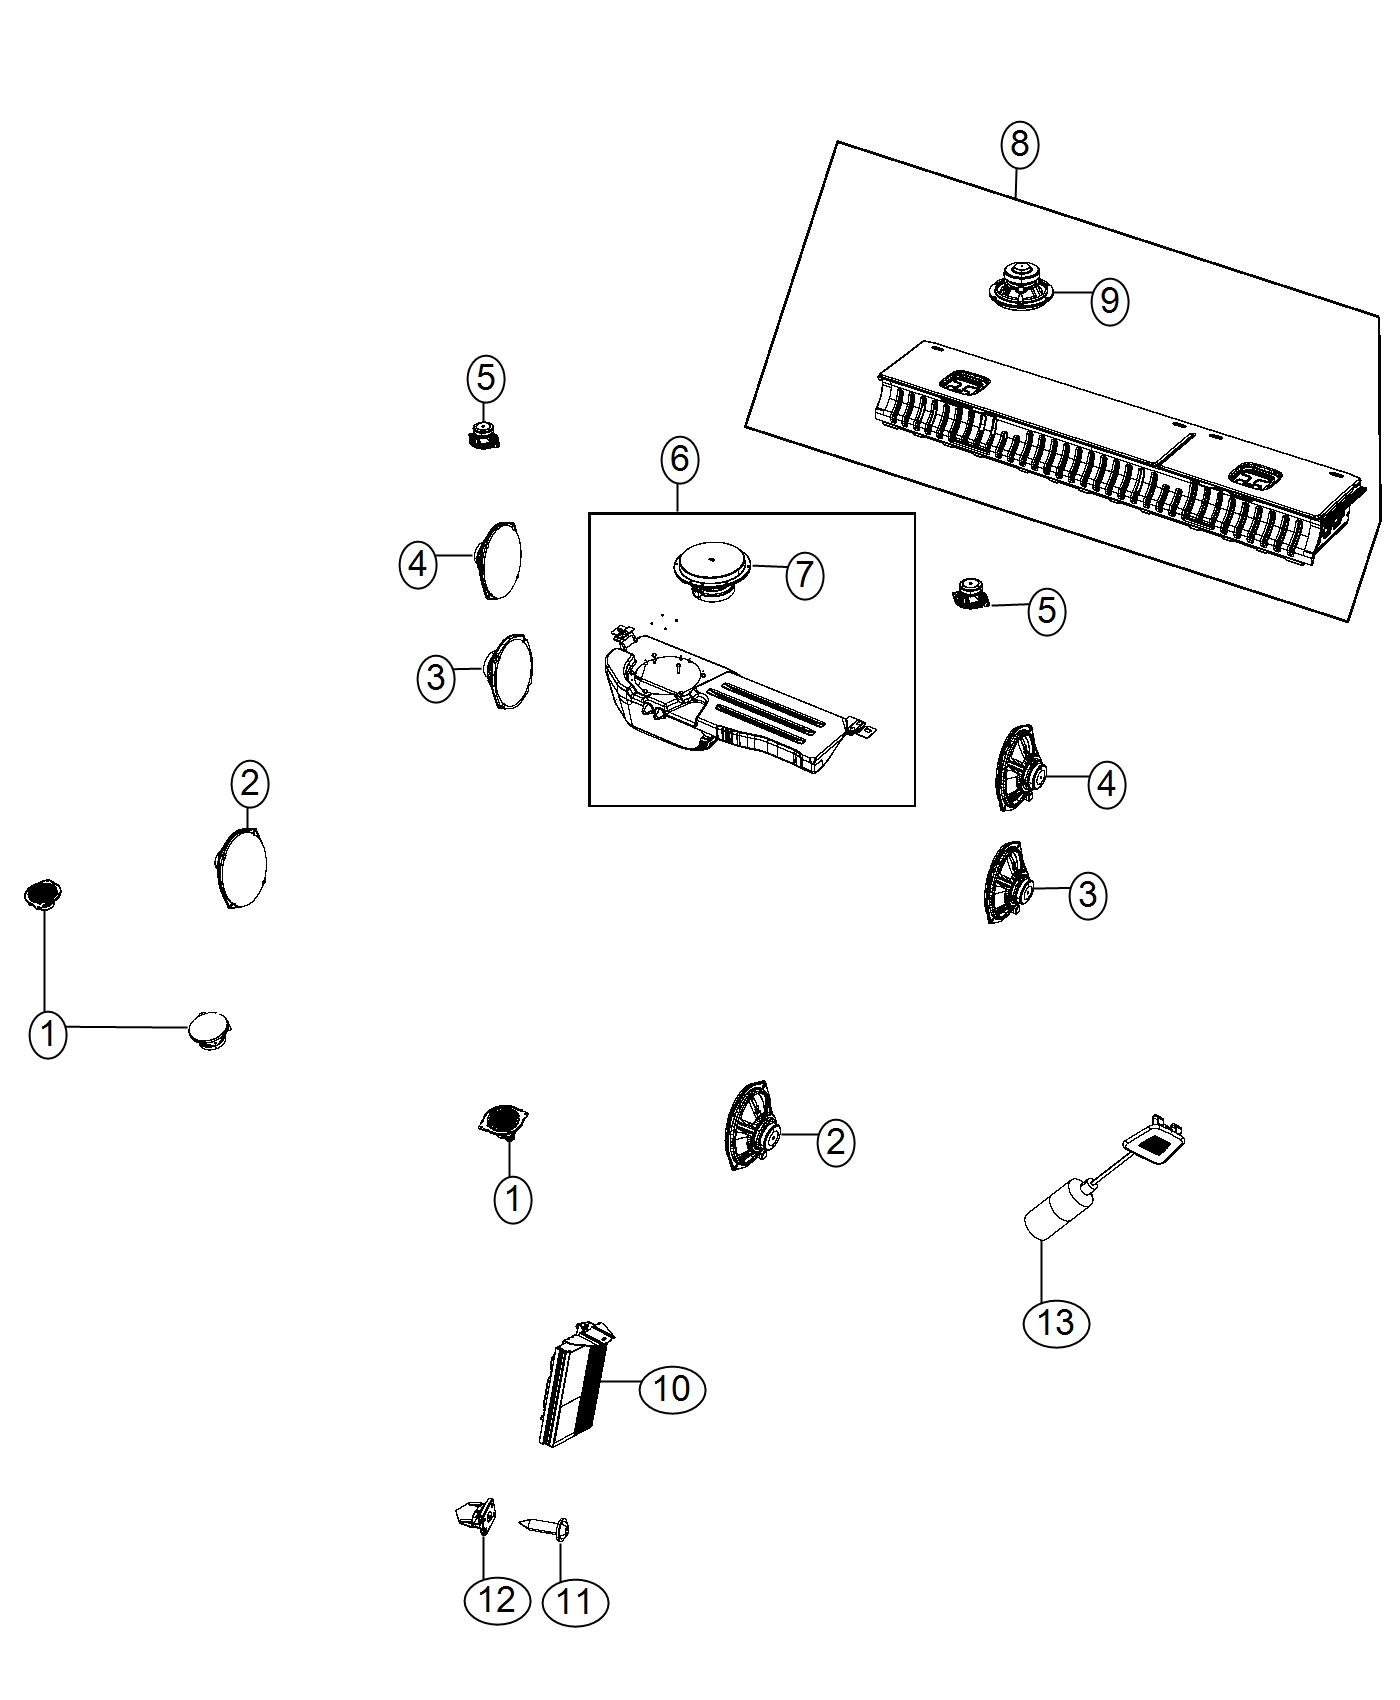 Speakers, Amplifiers, And Microphones. Diagram